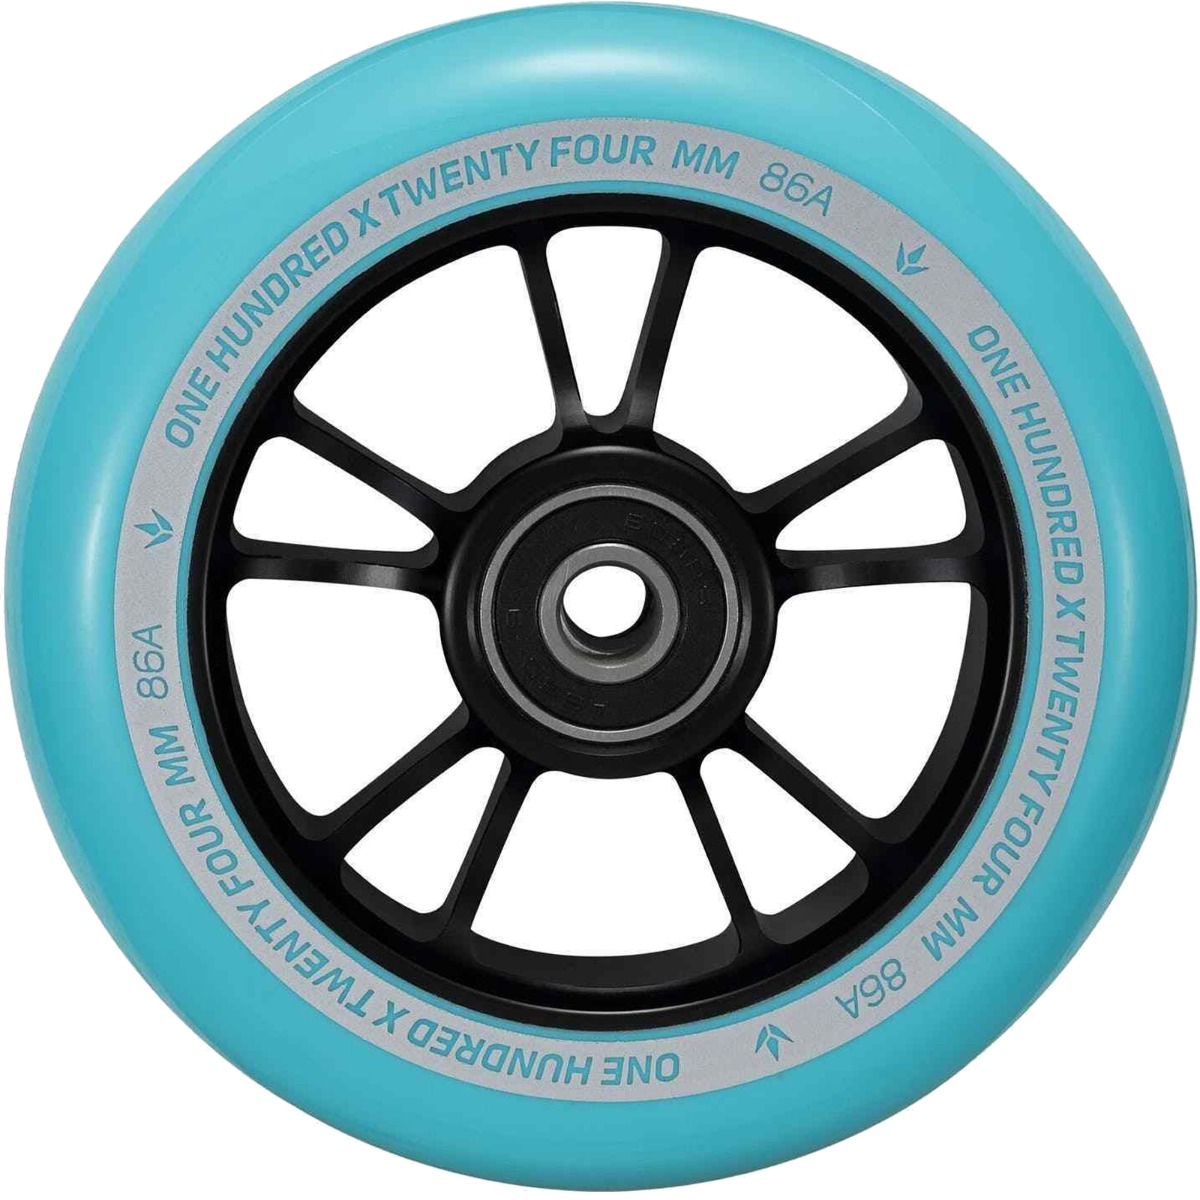 An image of Blunt Envy 100mm Scooter Wheel - Black / Teal